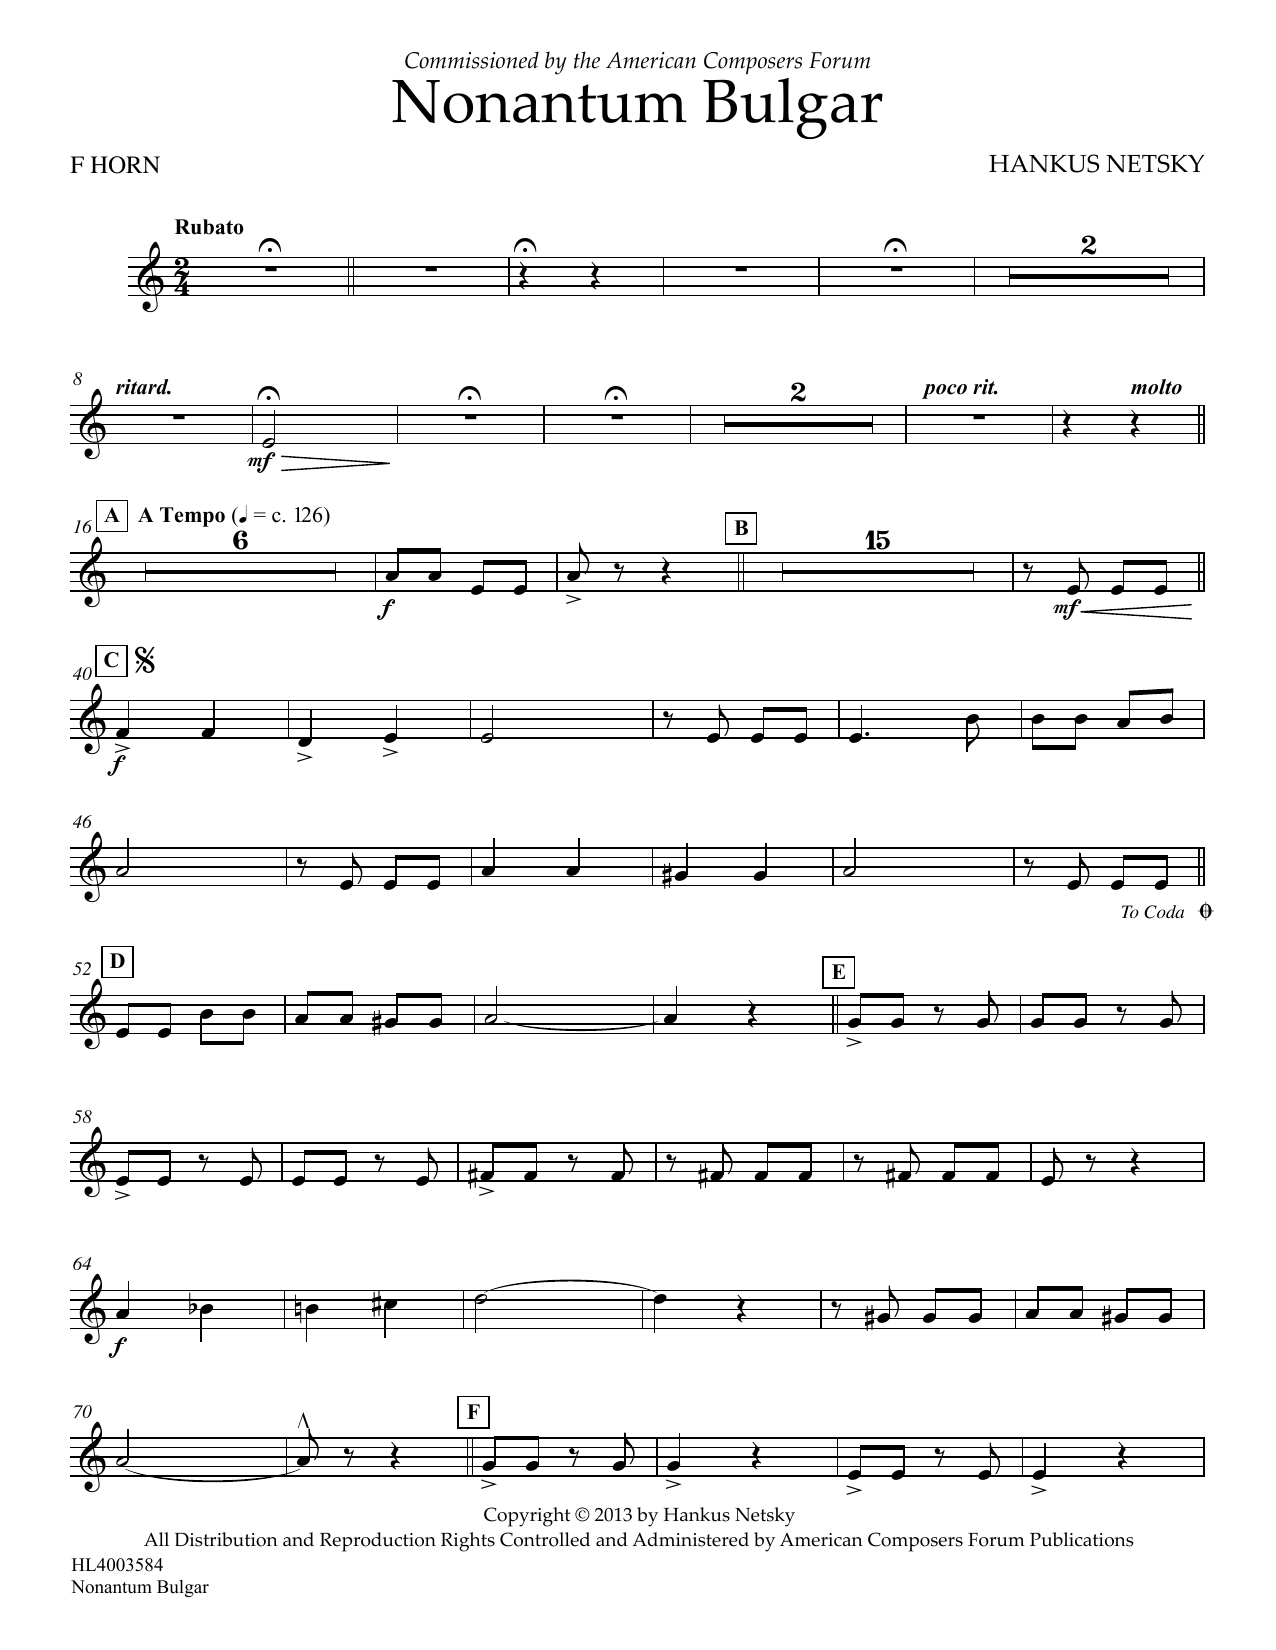 Hankus Netsky Nonantum Bulgar - FRENCH HORN Sheet Music Notes & Chords for Concert Band - Download or Print PDF